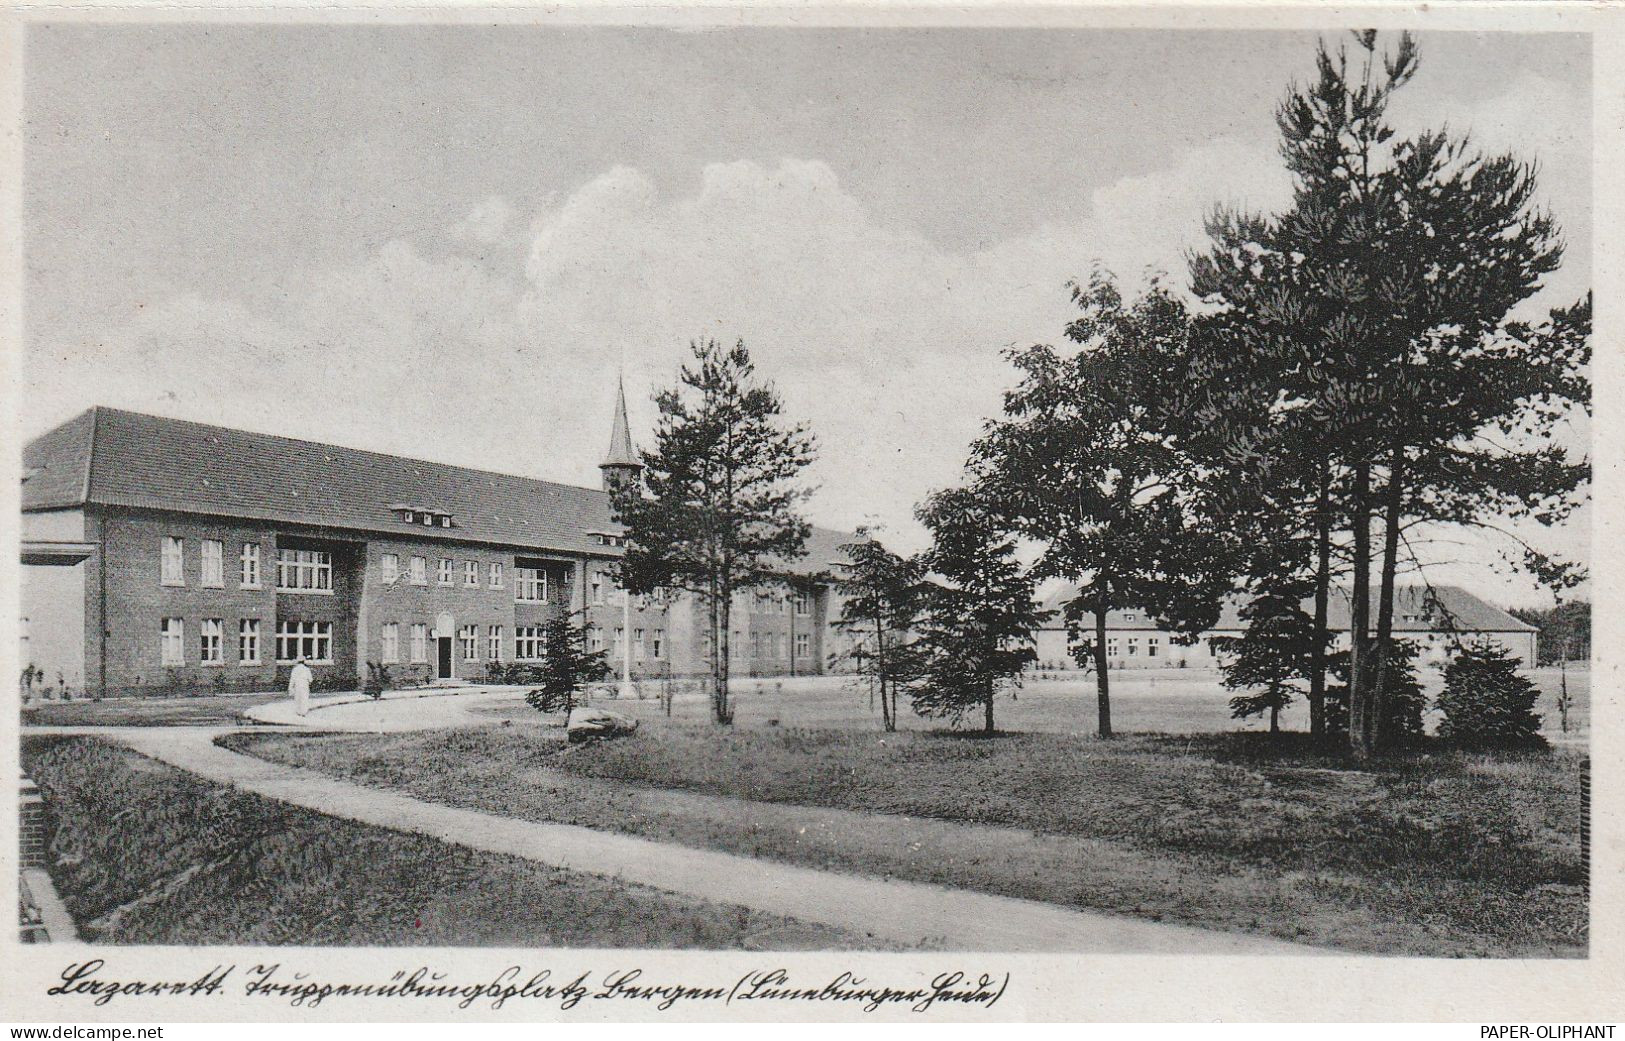 MILITÄR - TRUPPEN - ÜBUNGS - PLATZ BERGEN, Lazarett - Barracks